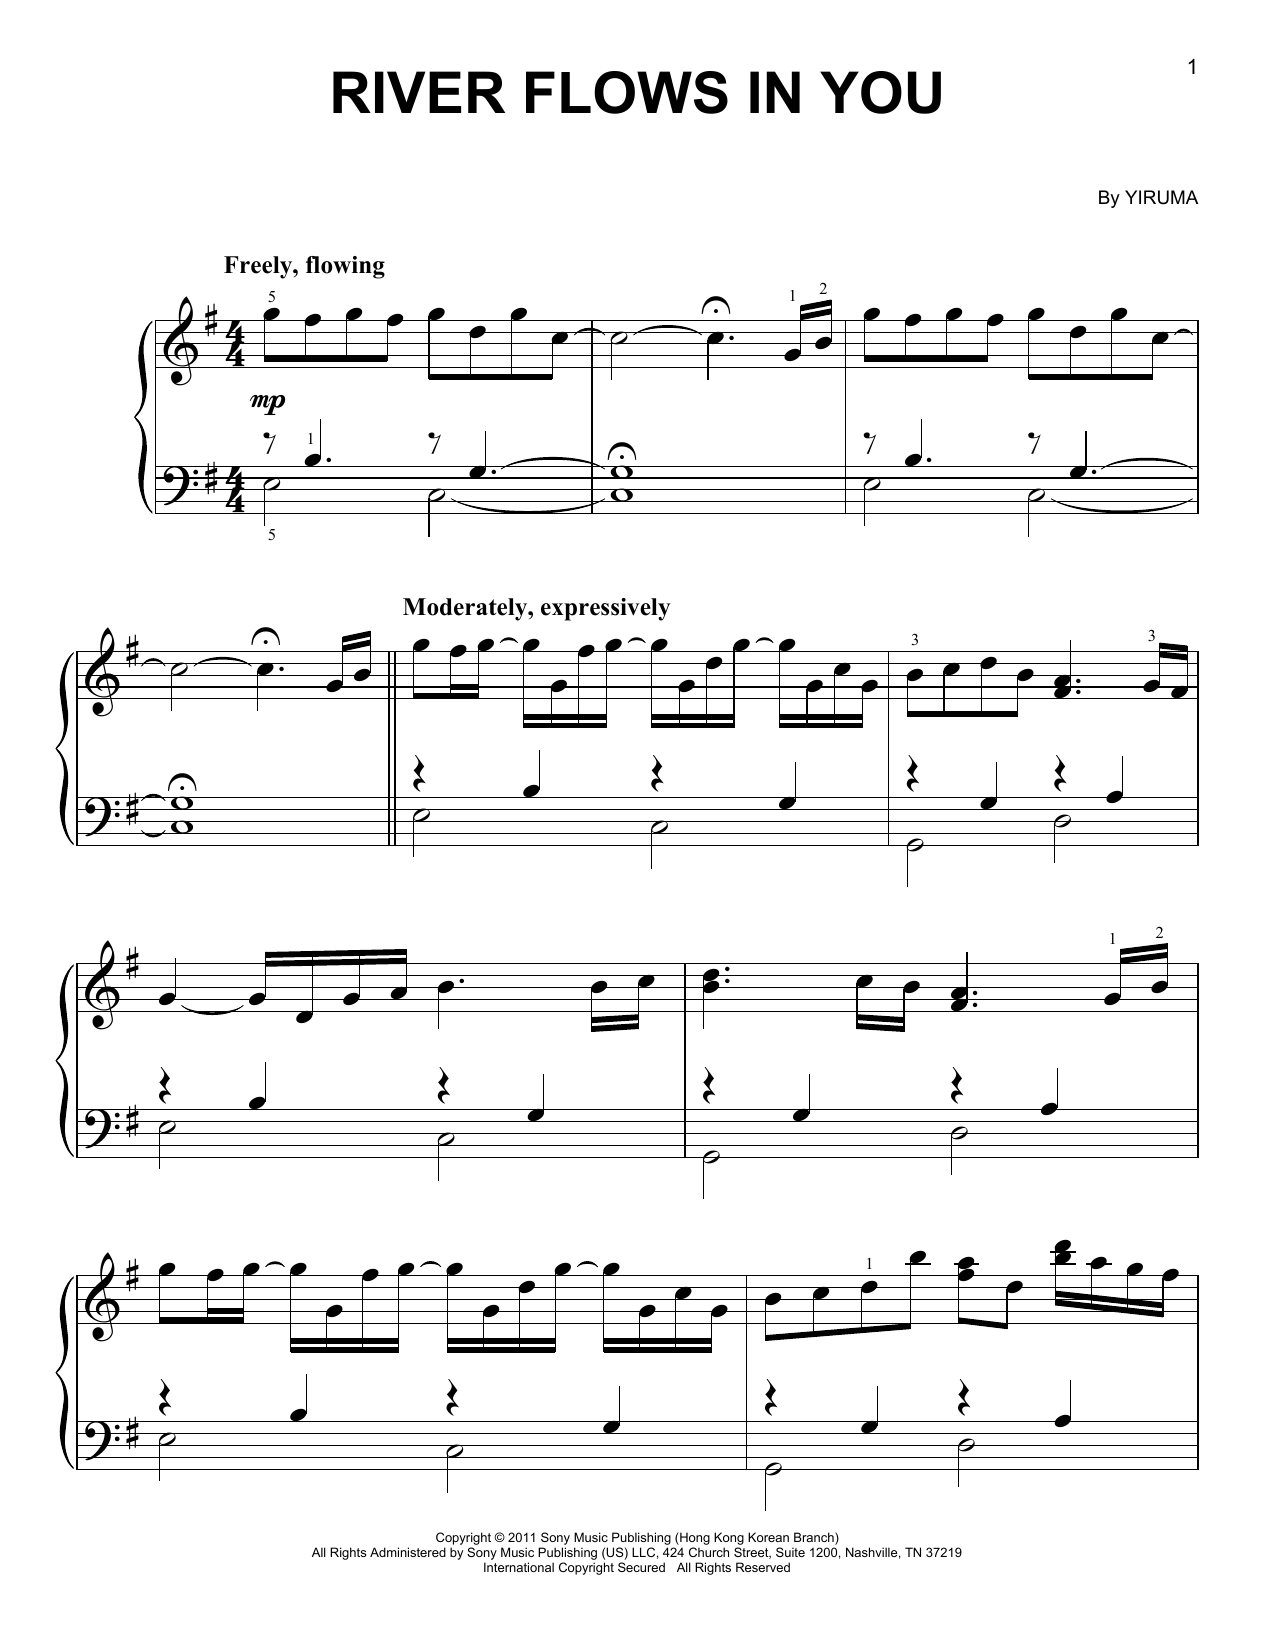 Yiruma River Flows In You Sheet Music Notes & Chords for Guitar Tab - Download or Print PDF